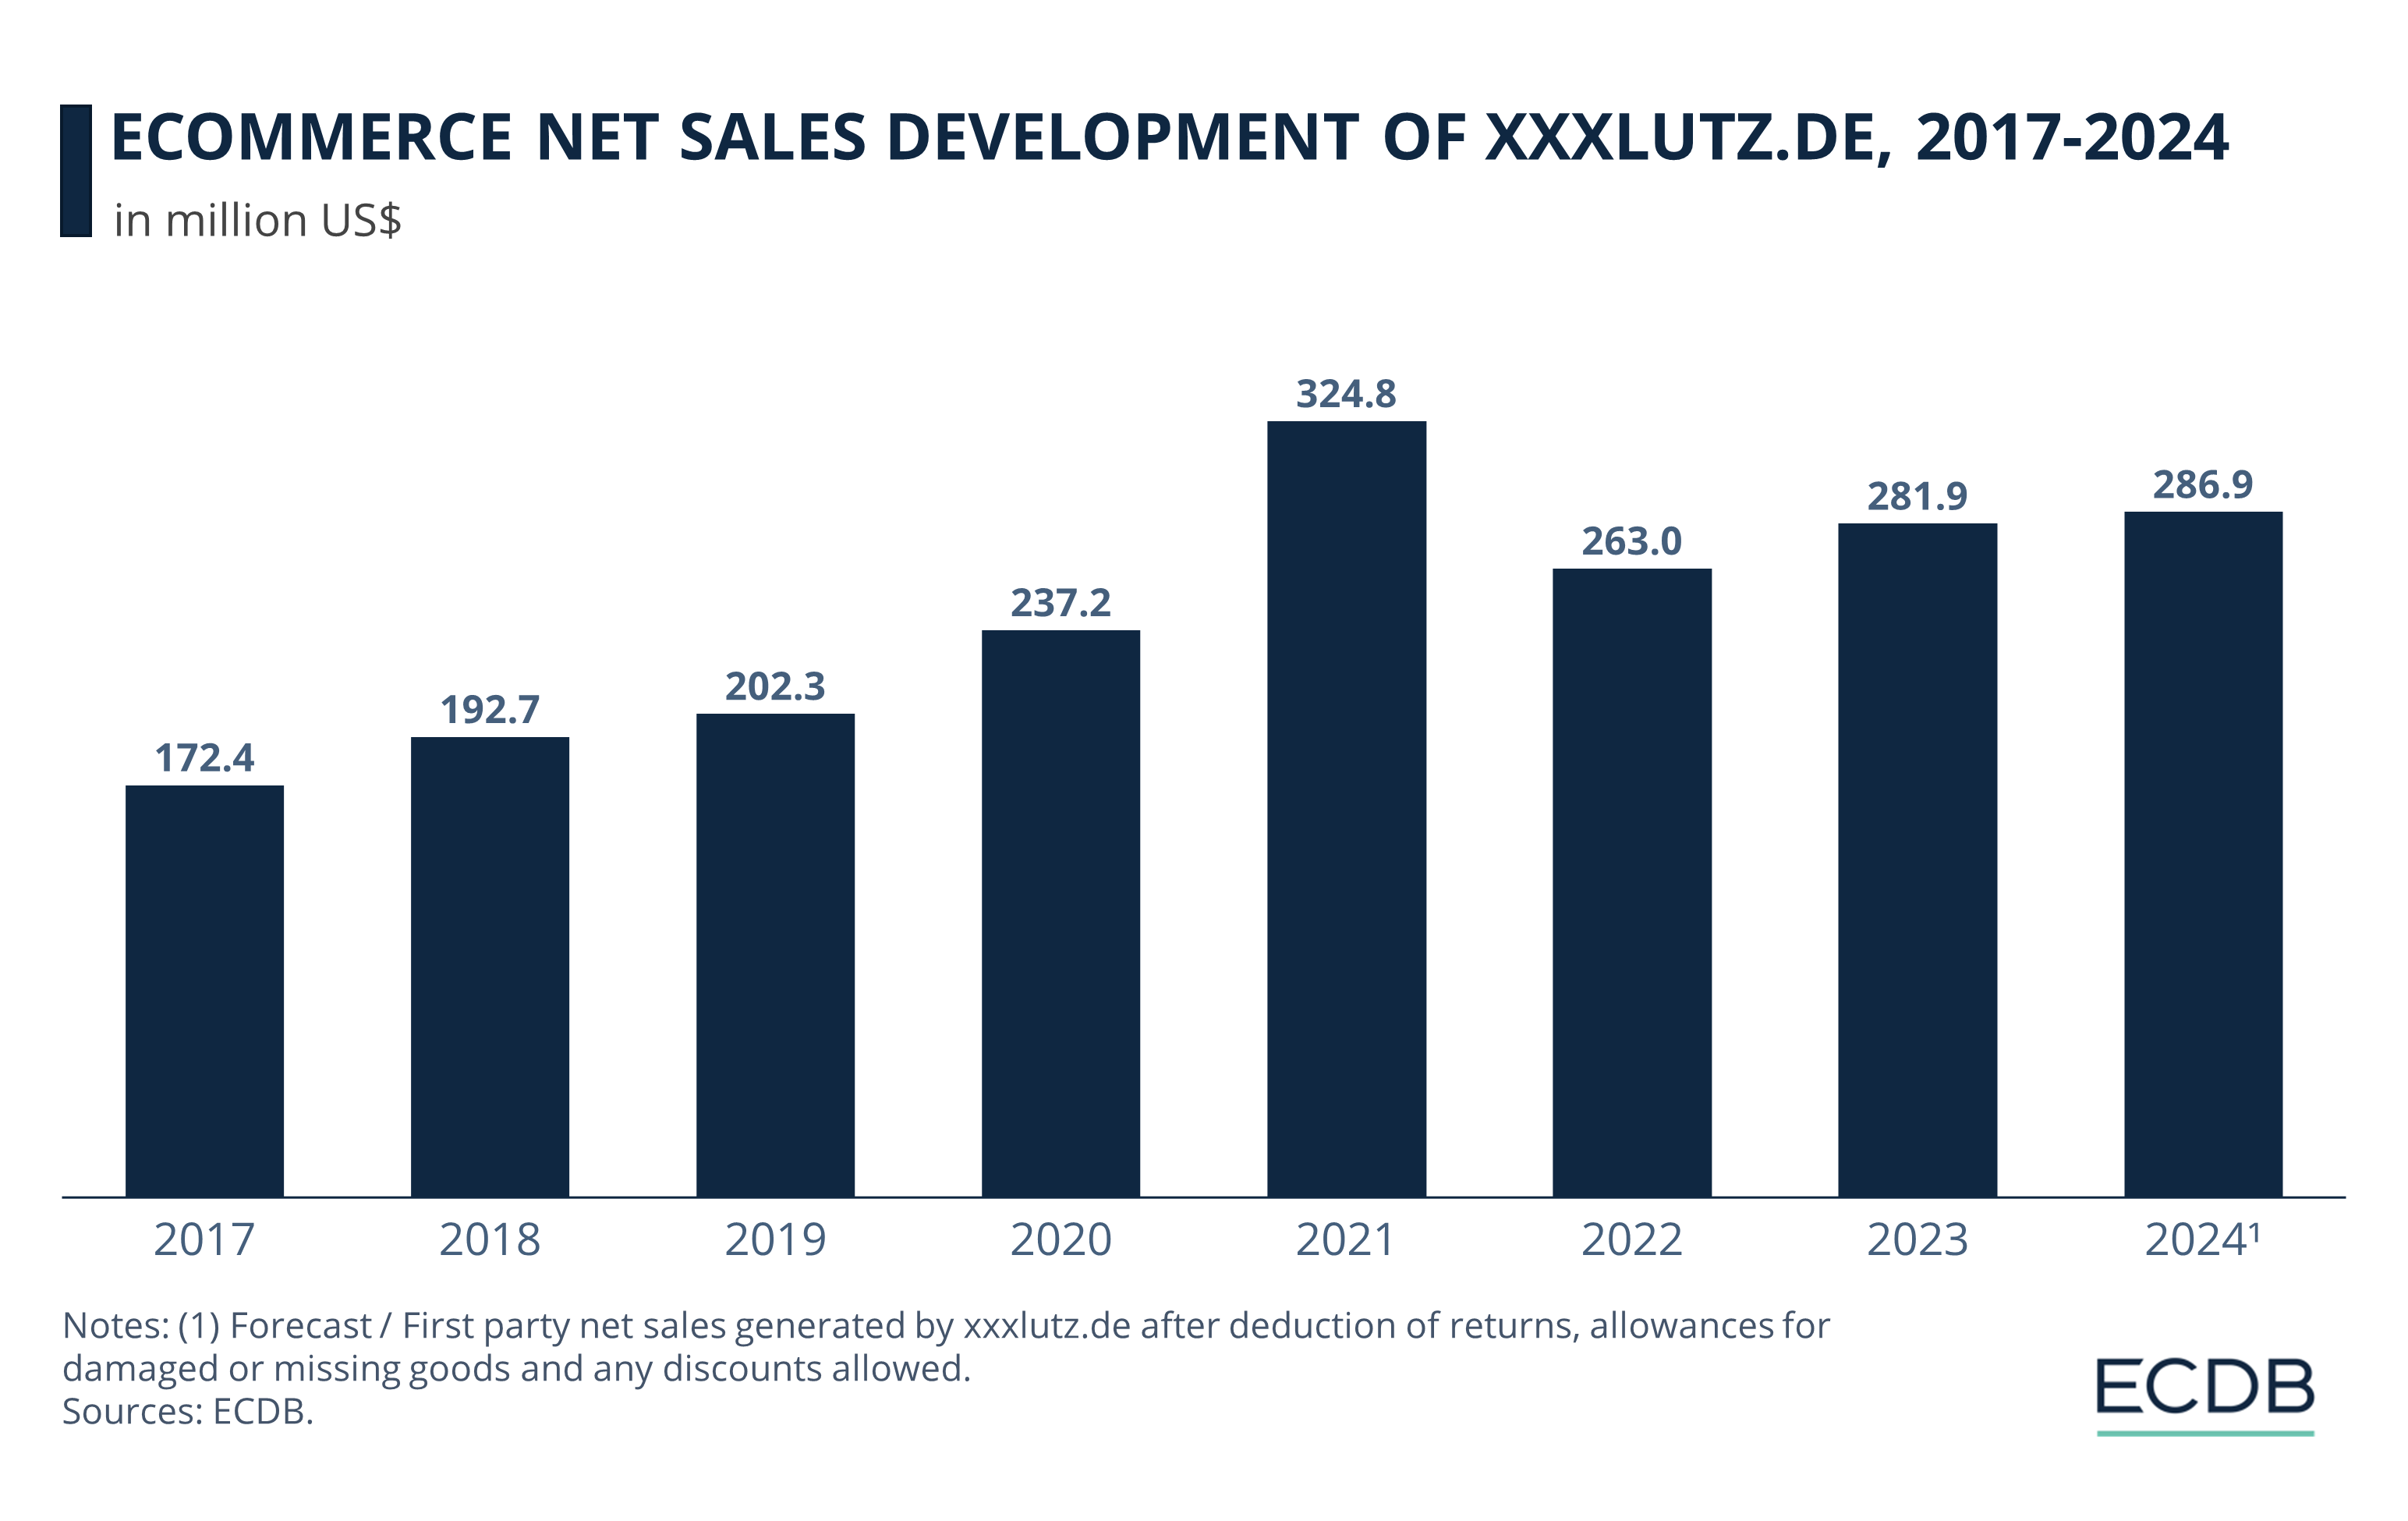 eCommerce Net Sales Development of Xxxlutz.de, 2017-2024